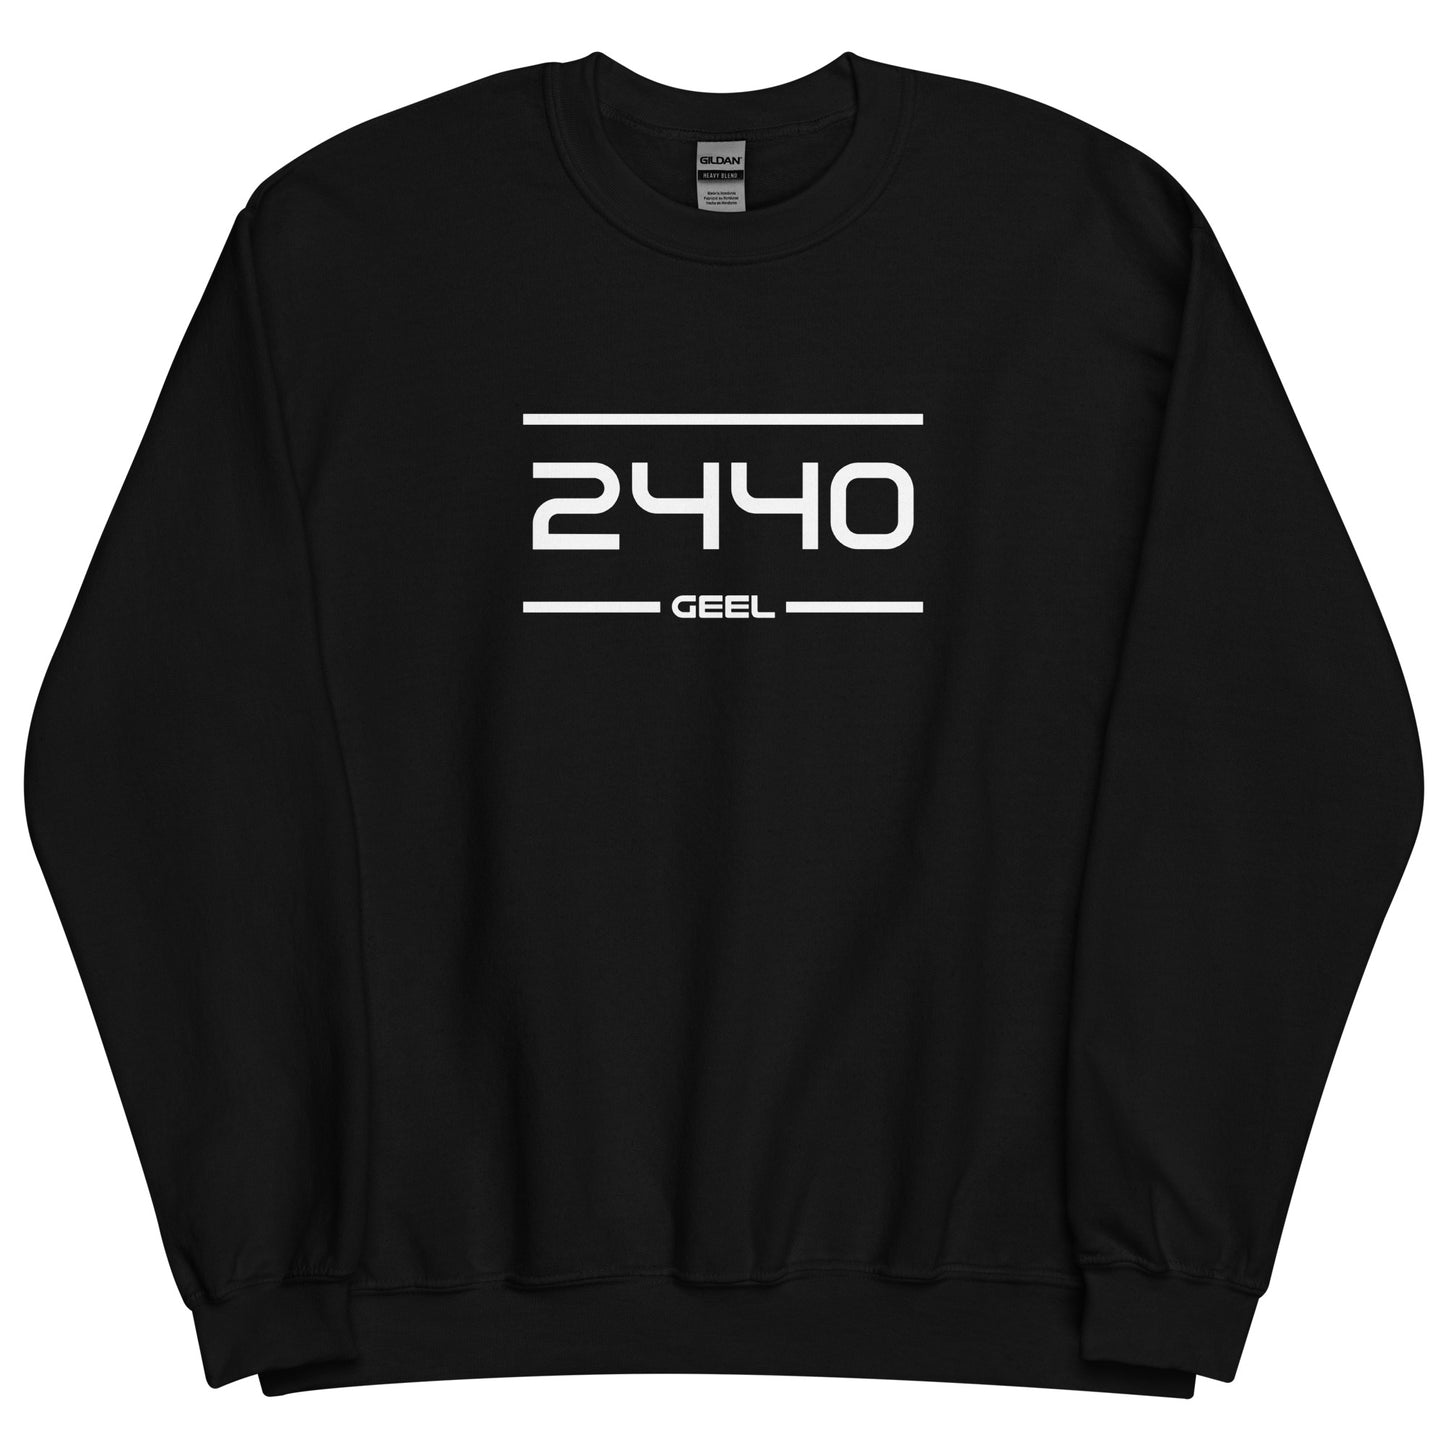 Sweater - 2440 - Geel (M/V)